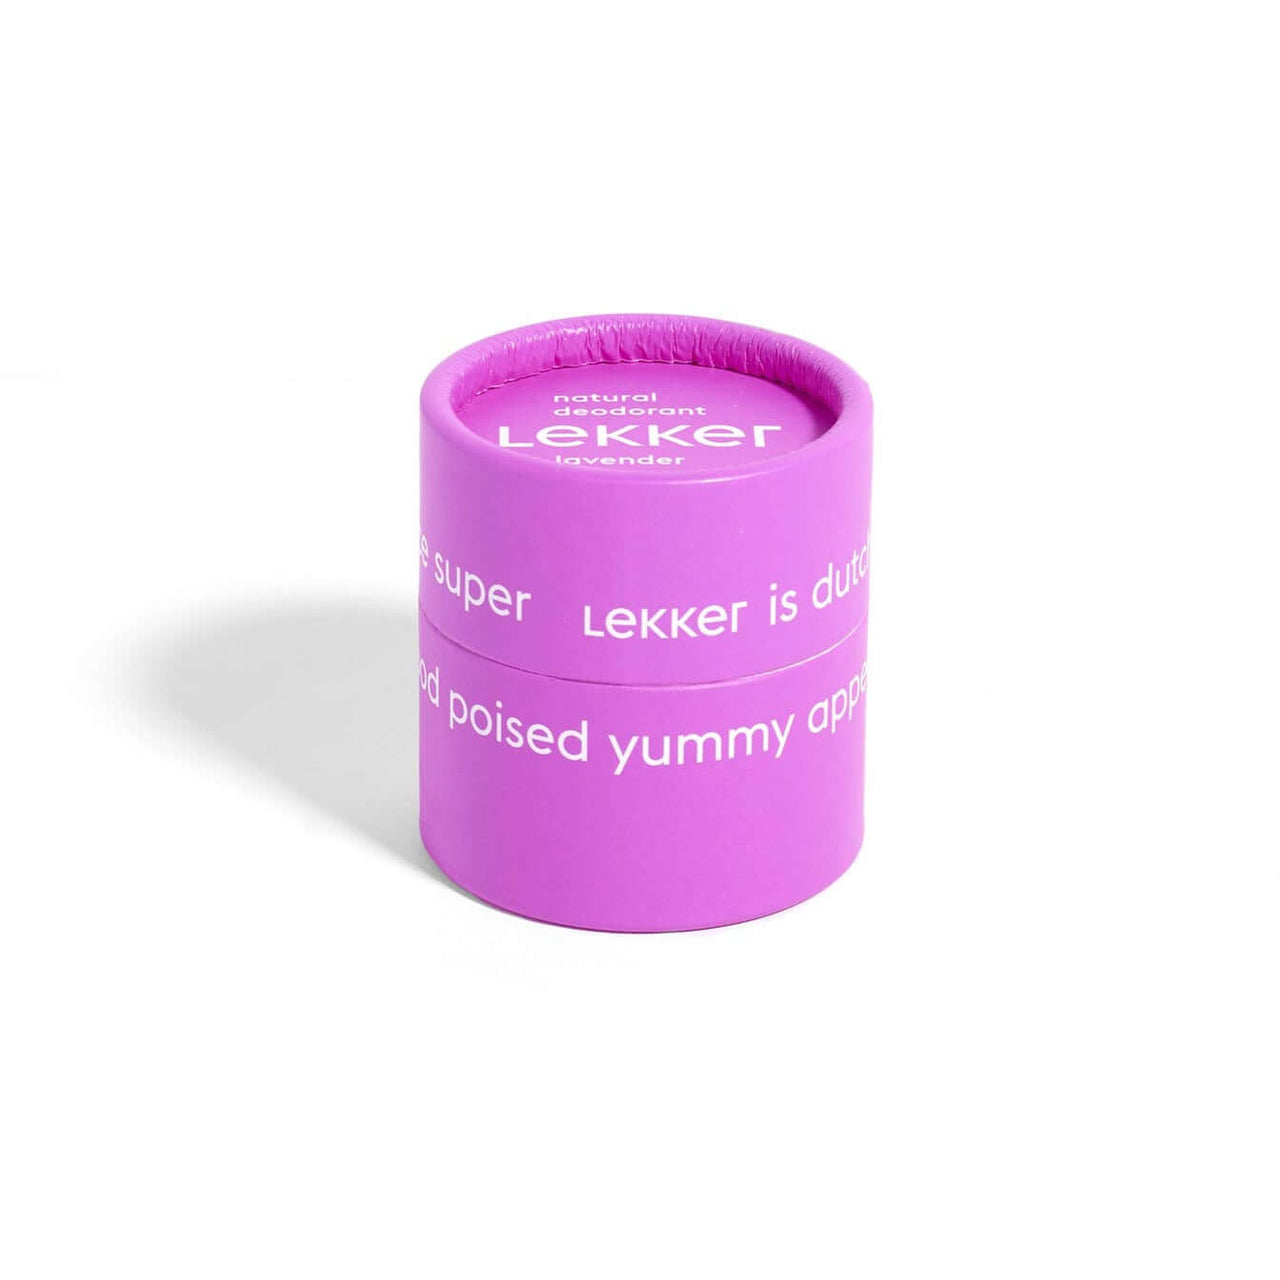 The Lekker Company Natural Deodorant LAVENDER